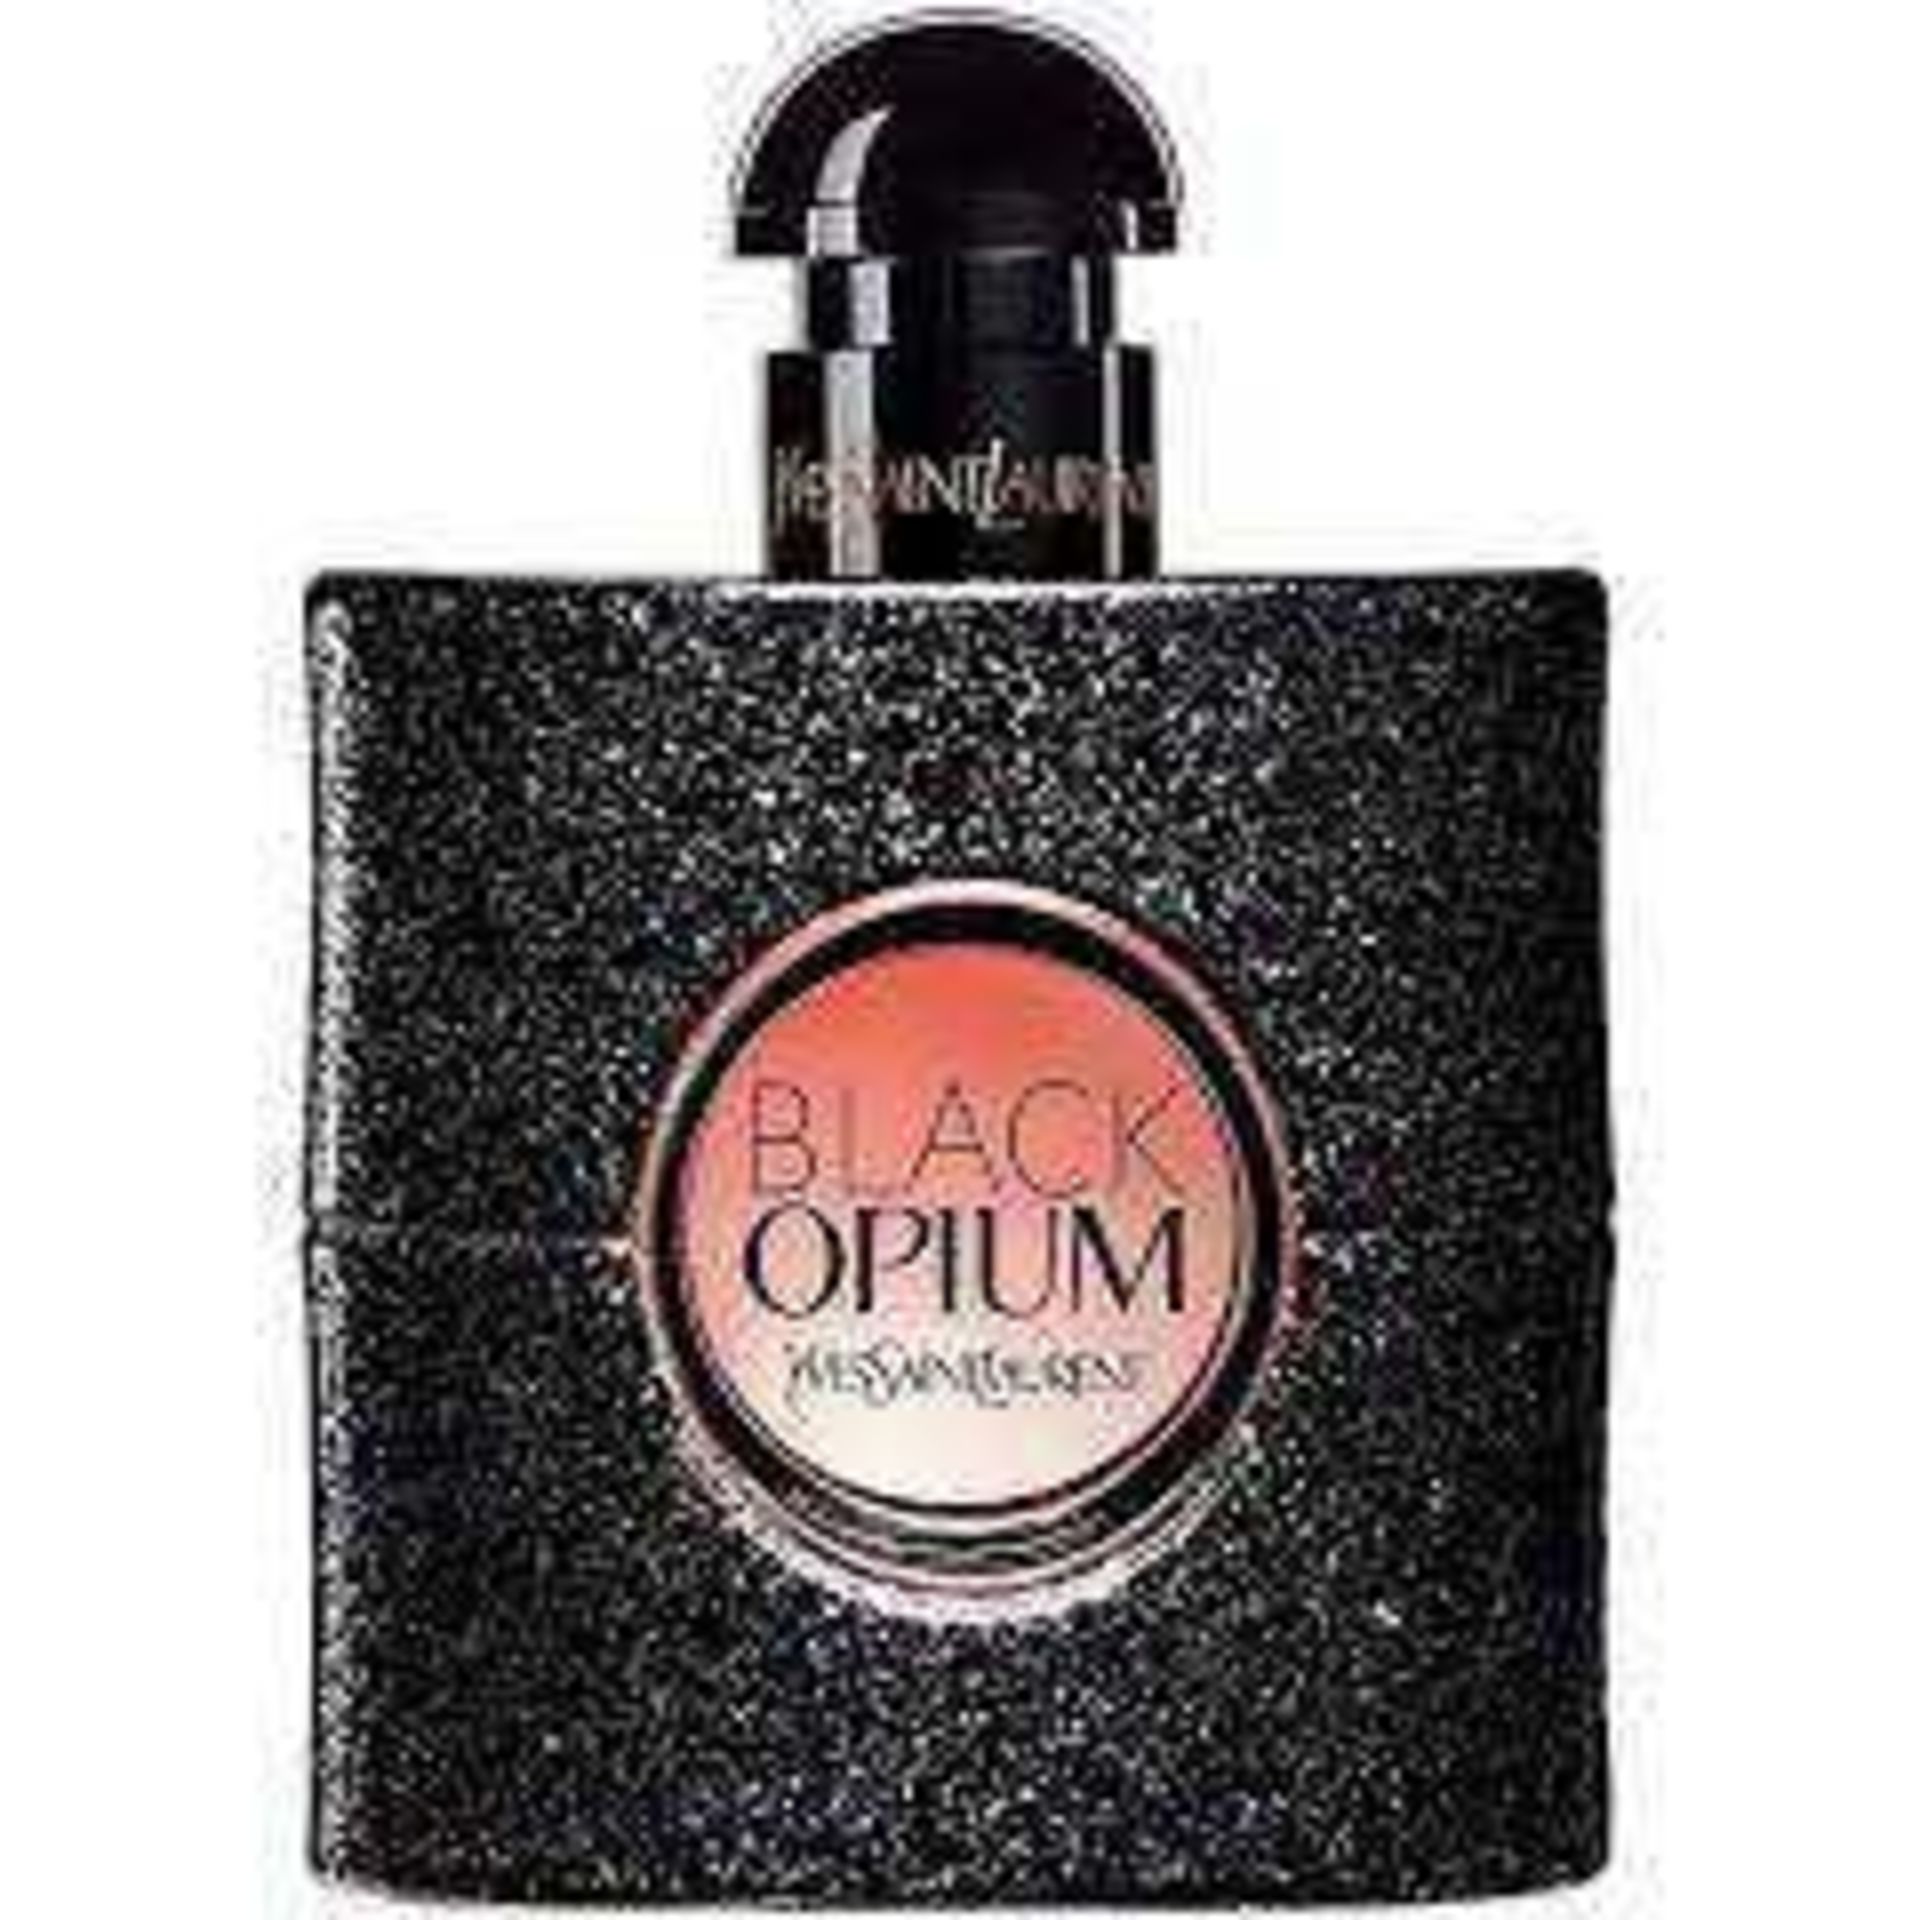 Rrp £100 Unboxed 100Ml Bottle Of Yves Saint Laurent Black Opium Edt Spray Ex Display